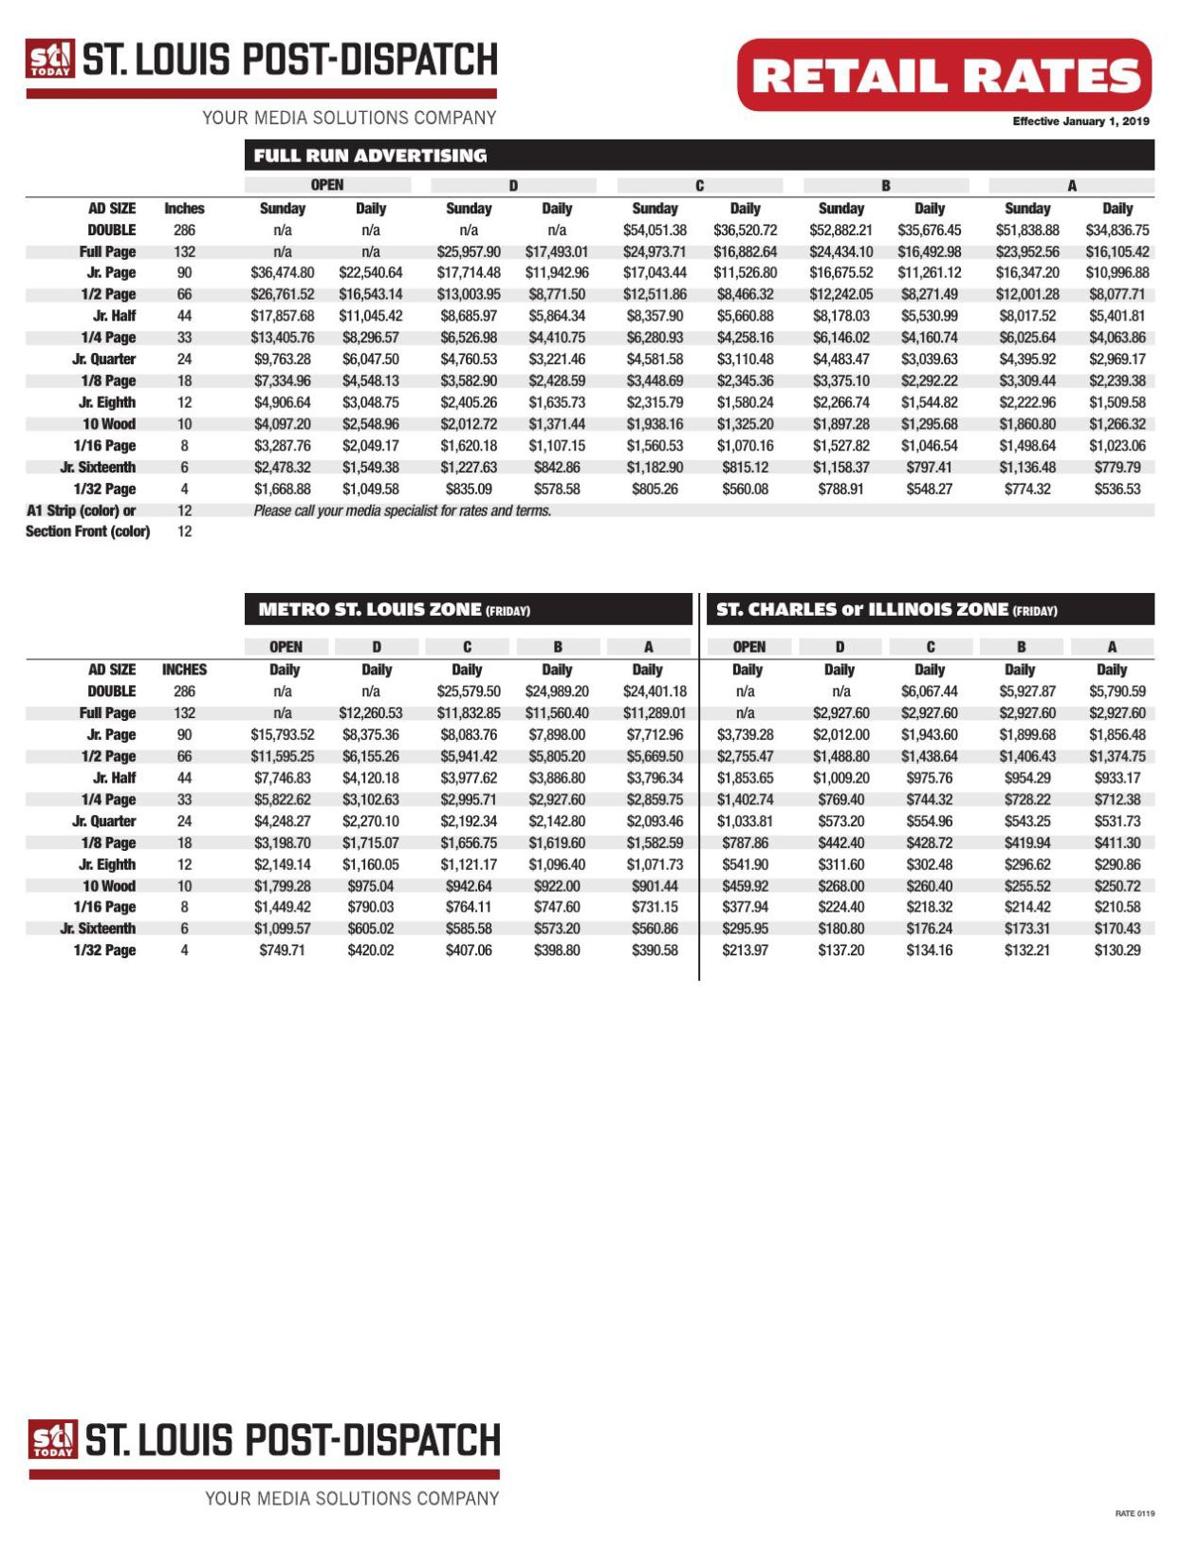 St. Louis Post-Dispatch Retail Rates | Print Media | www.ermes-unice.fr